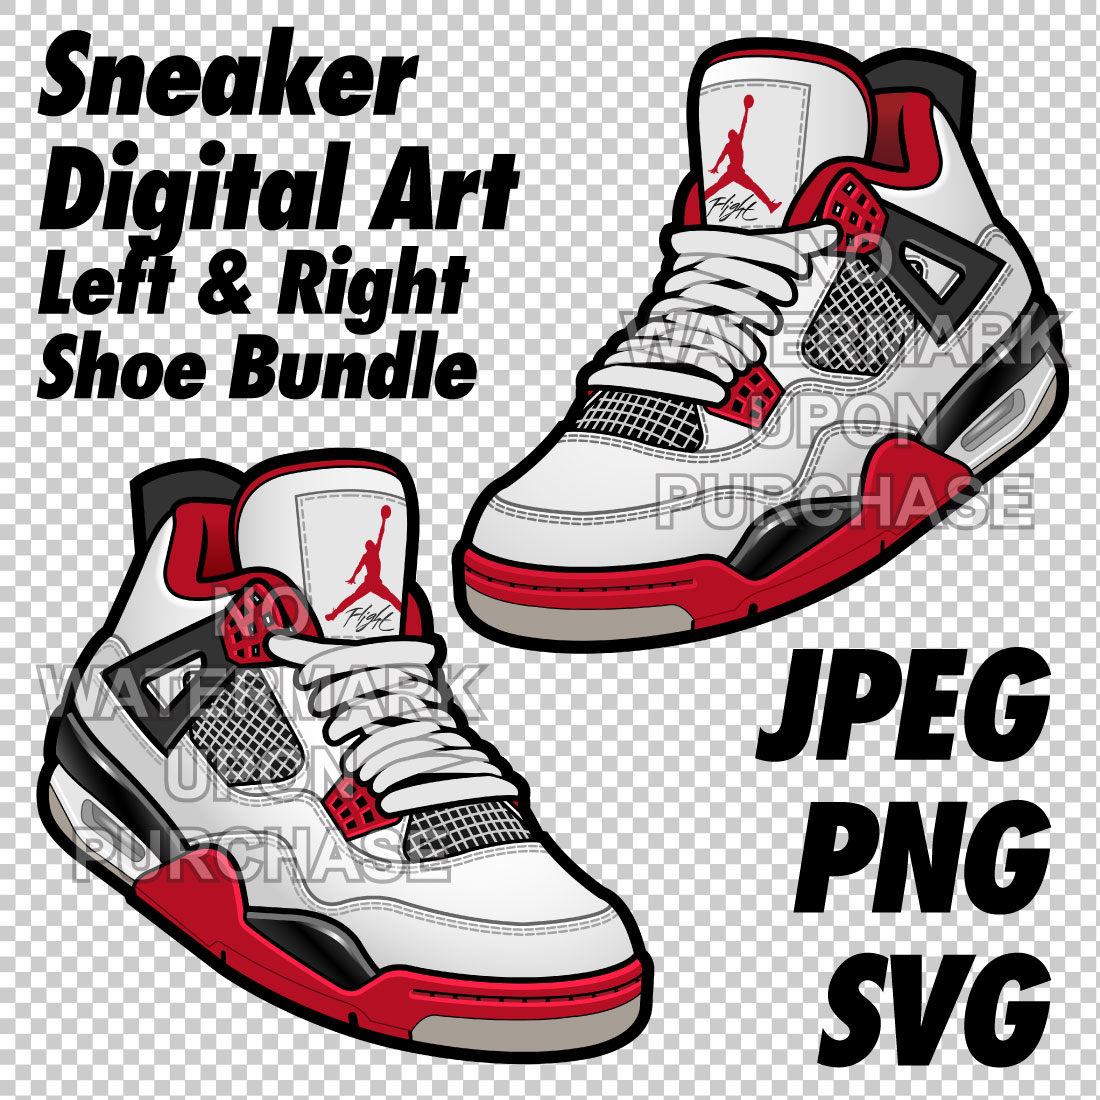 Air Jordan 4 Fire Red JPEG PNG SVG Sneaker Art right & left shoe bundle cover image.